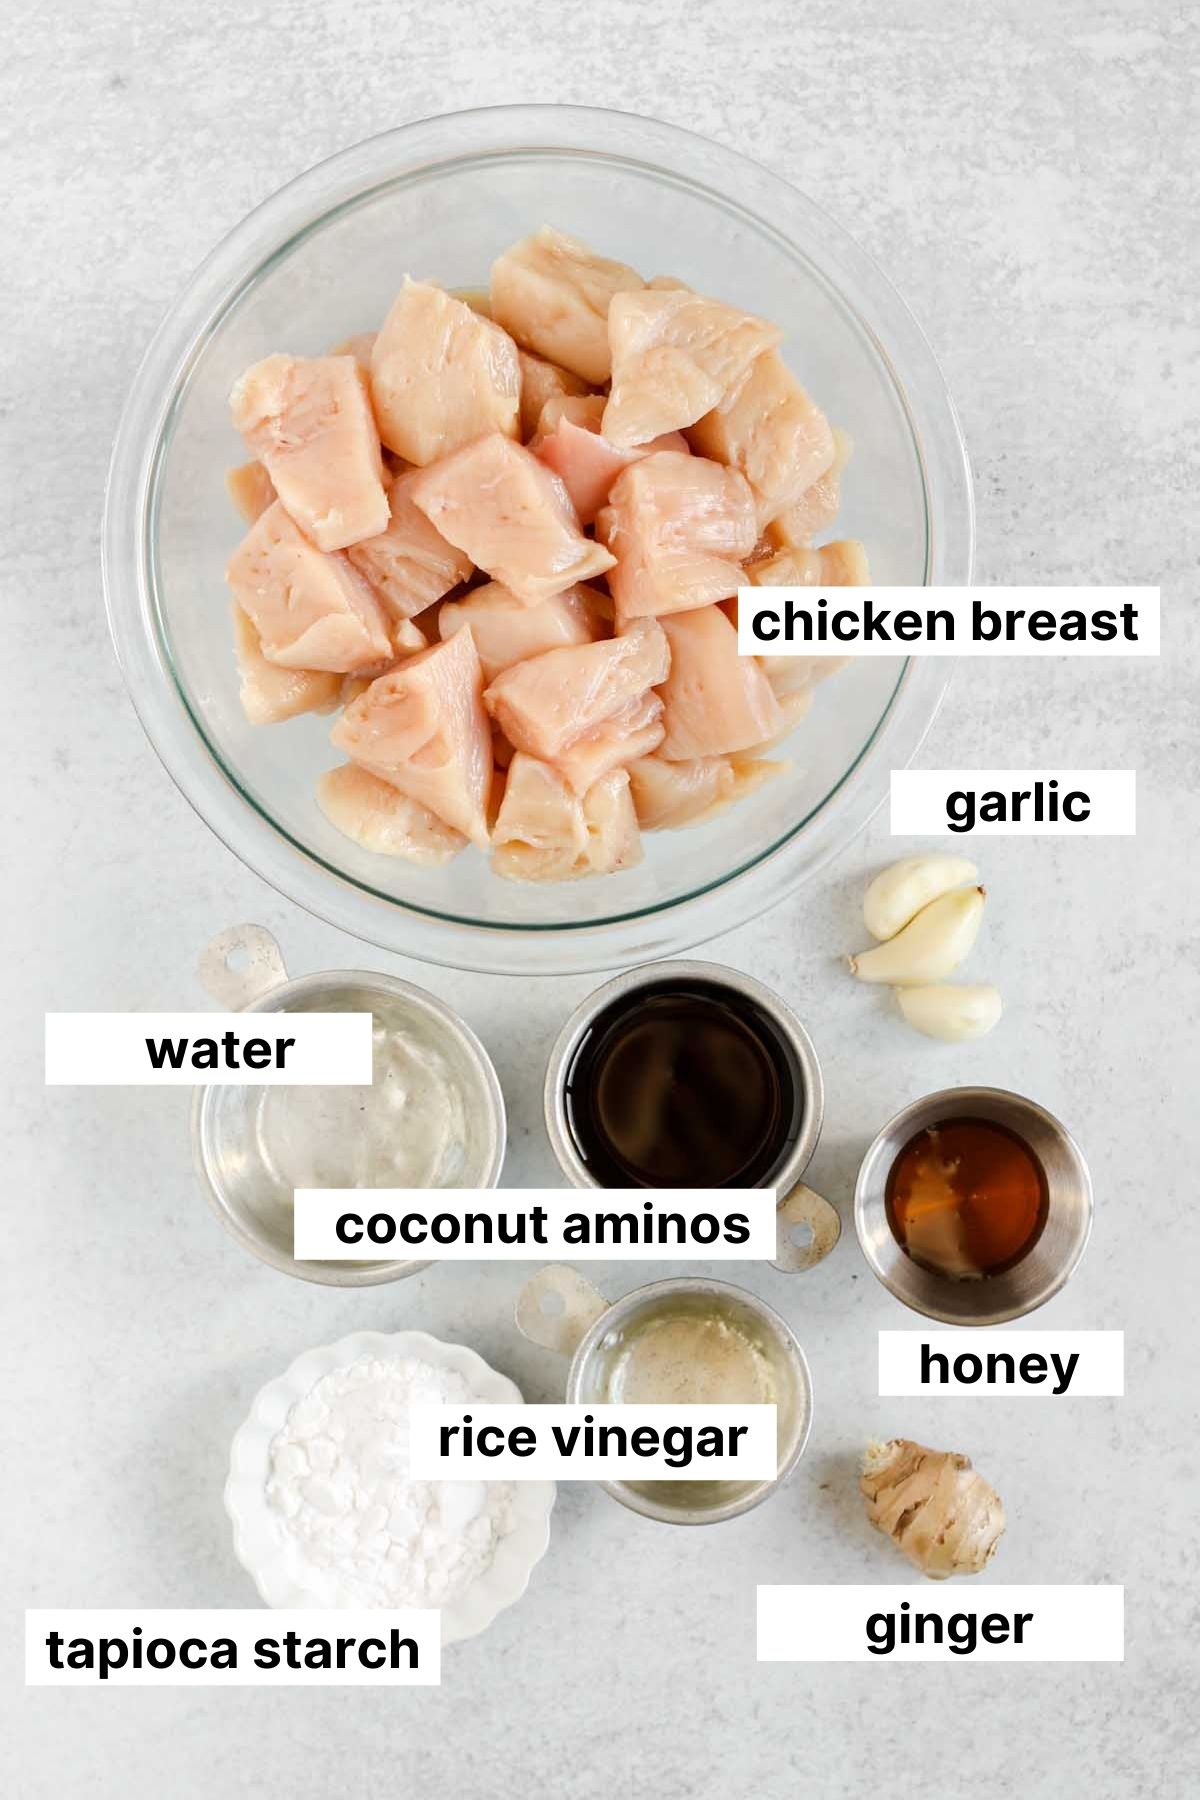 Labeled ingredients used for teriyaki chicken.